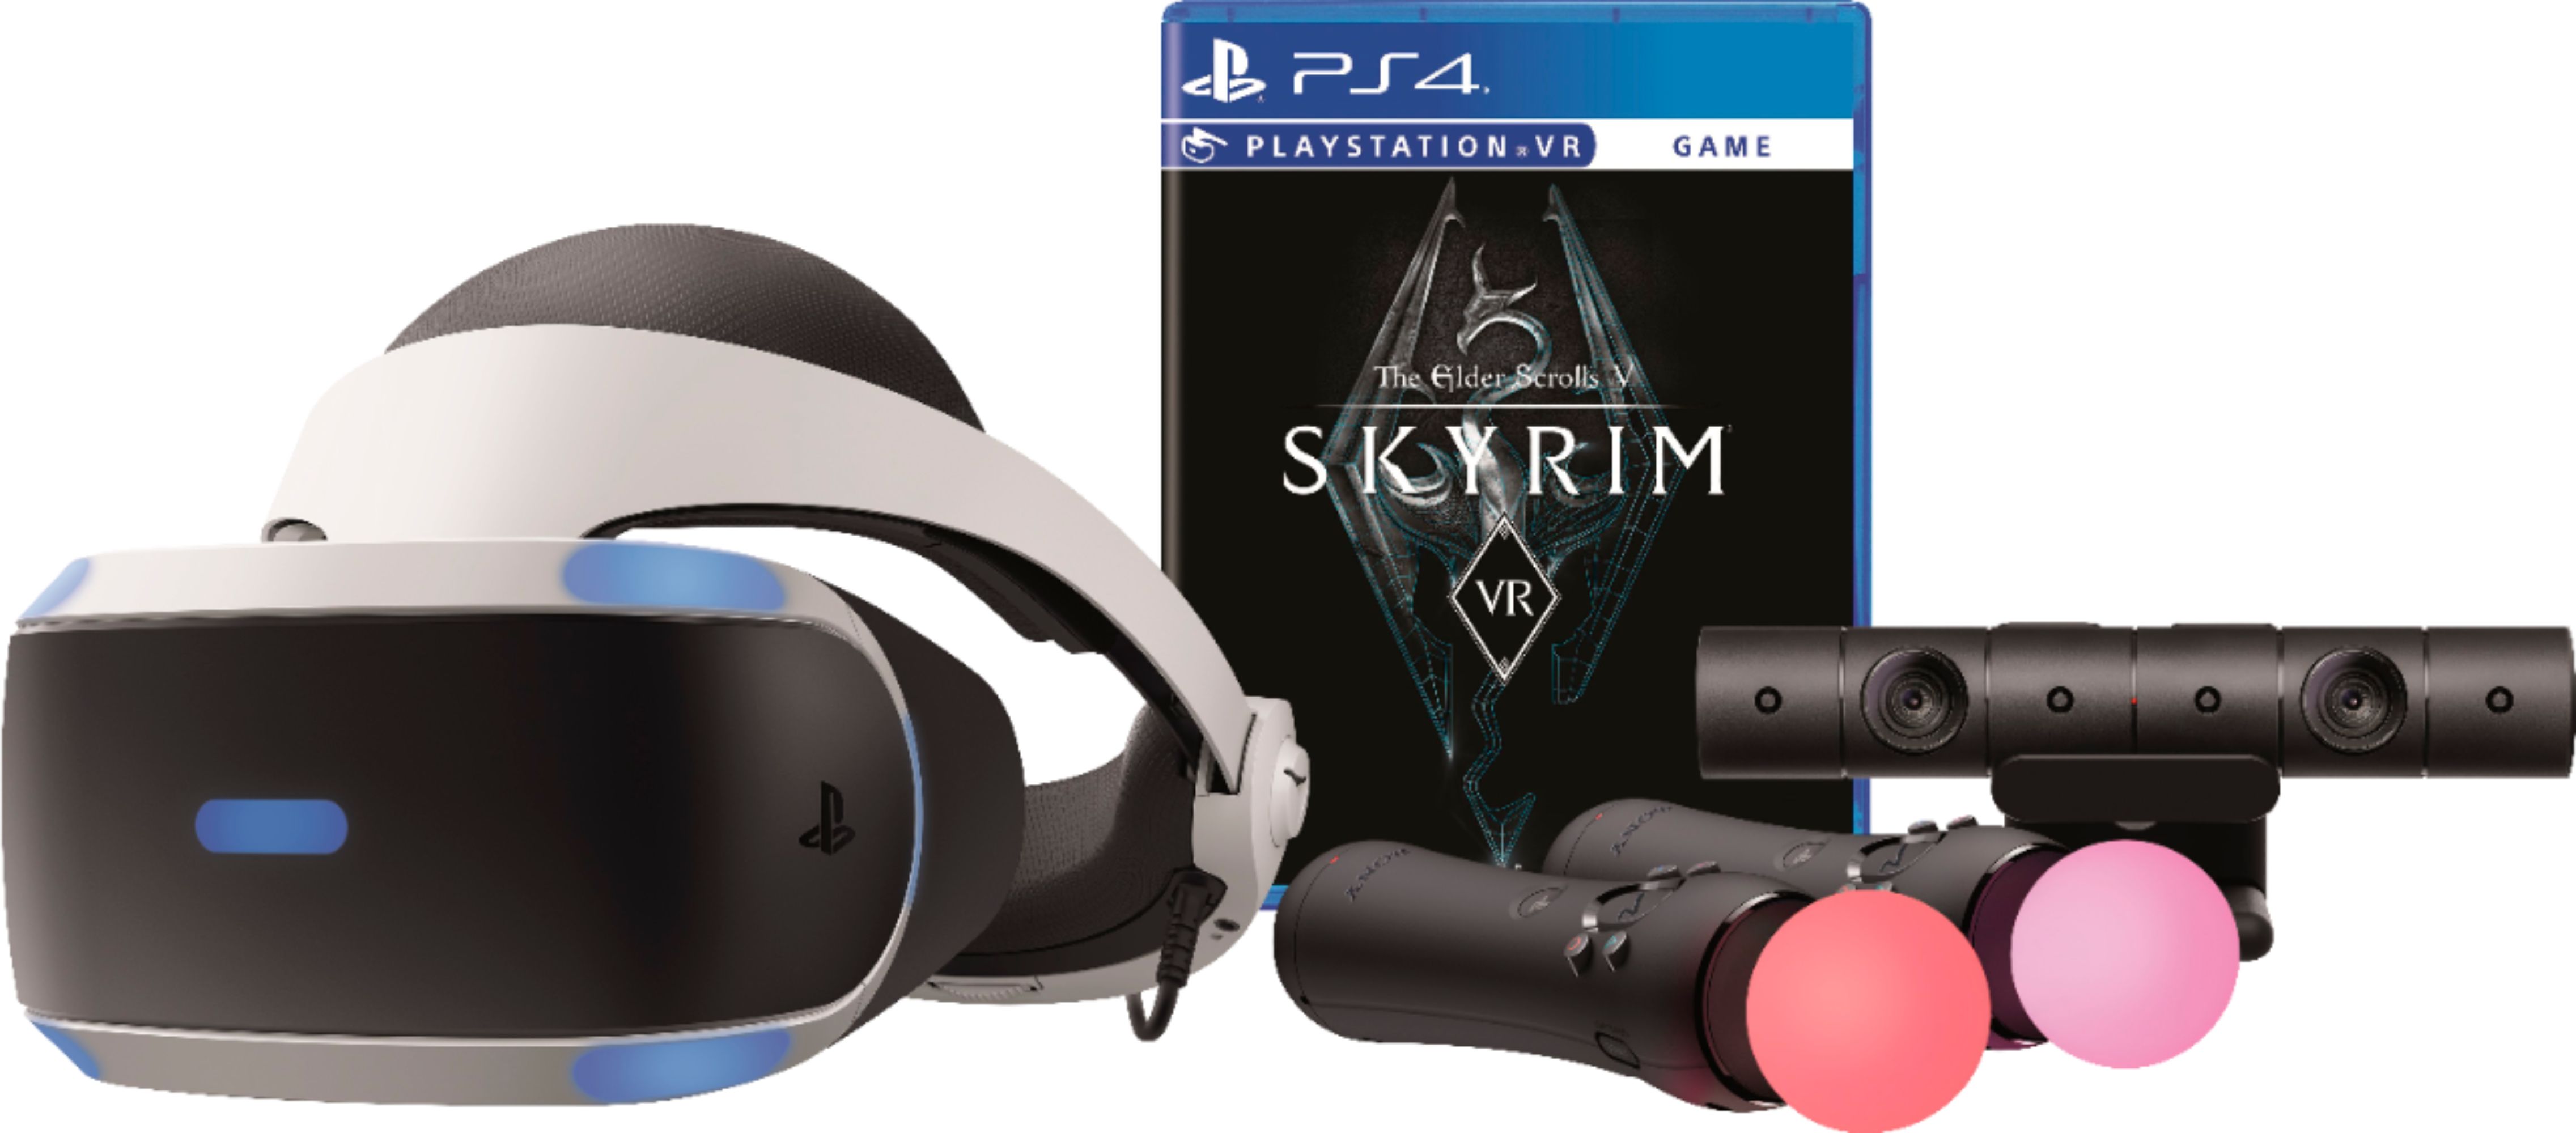 PlayStation VR The Elder Scrolls V: Skyrim Bundle White/Black 3002425 - Buy